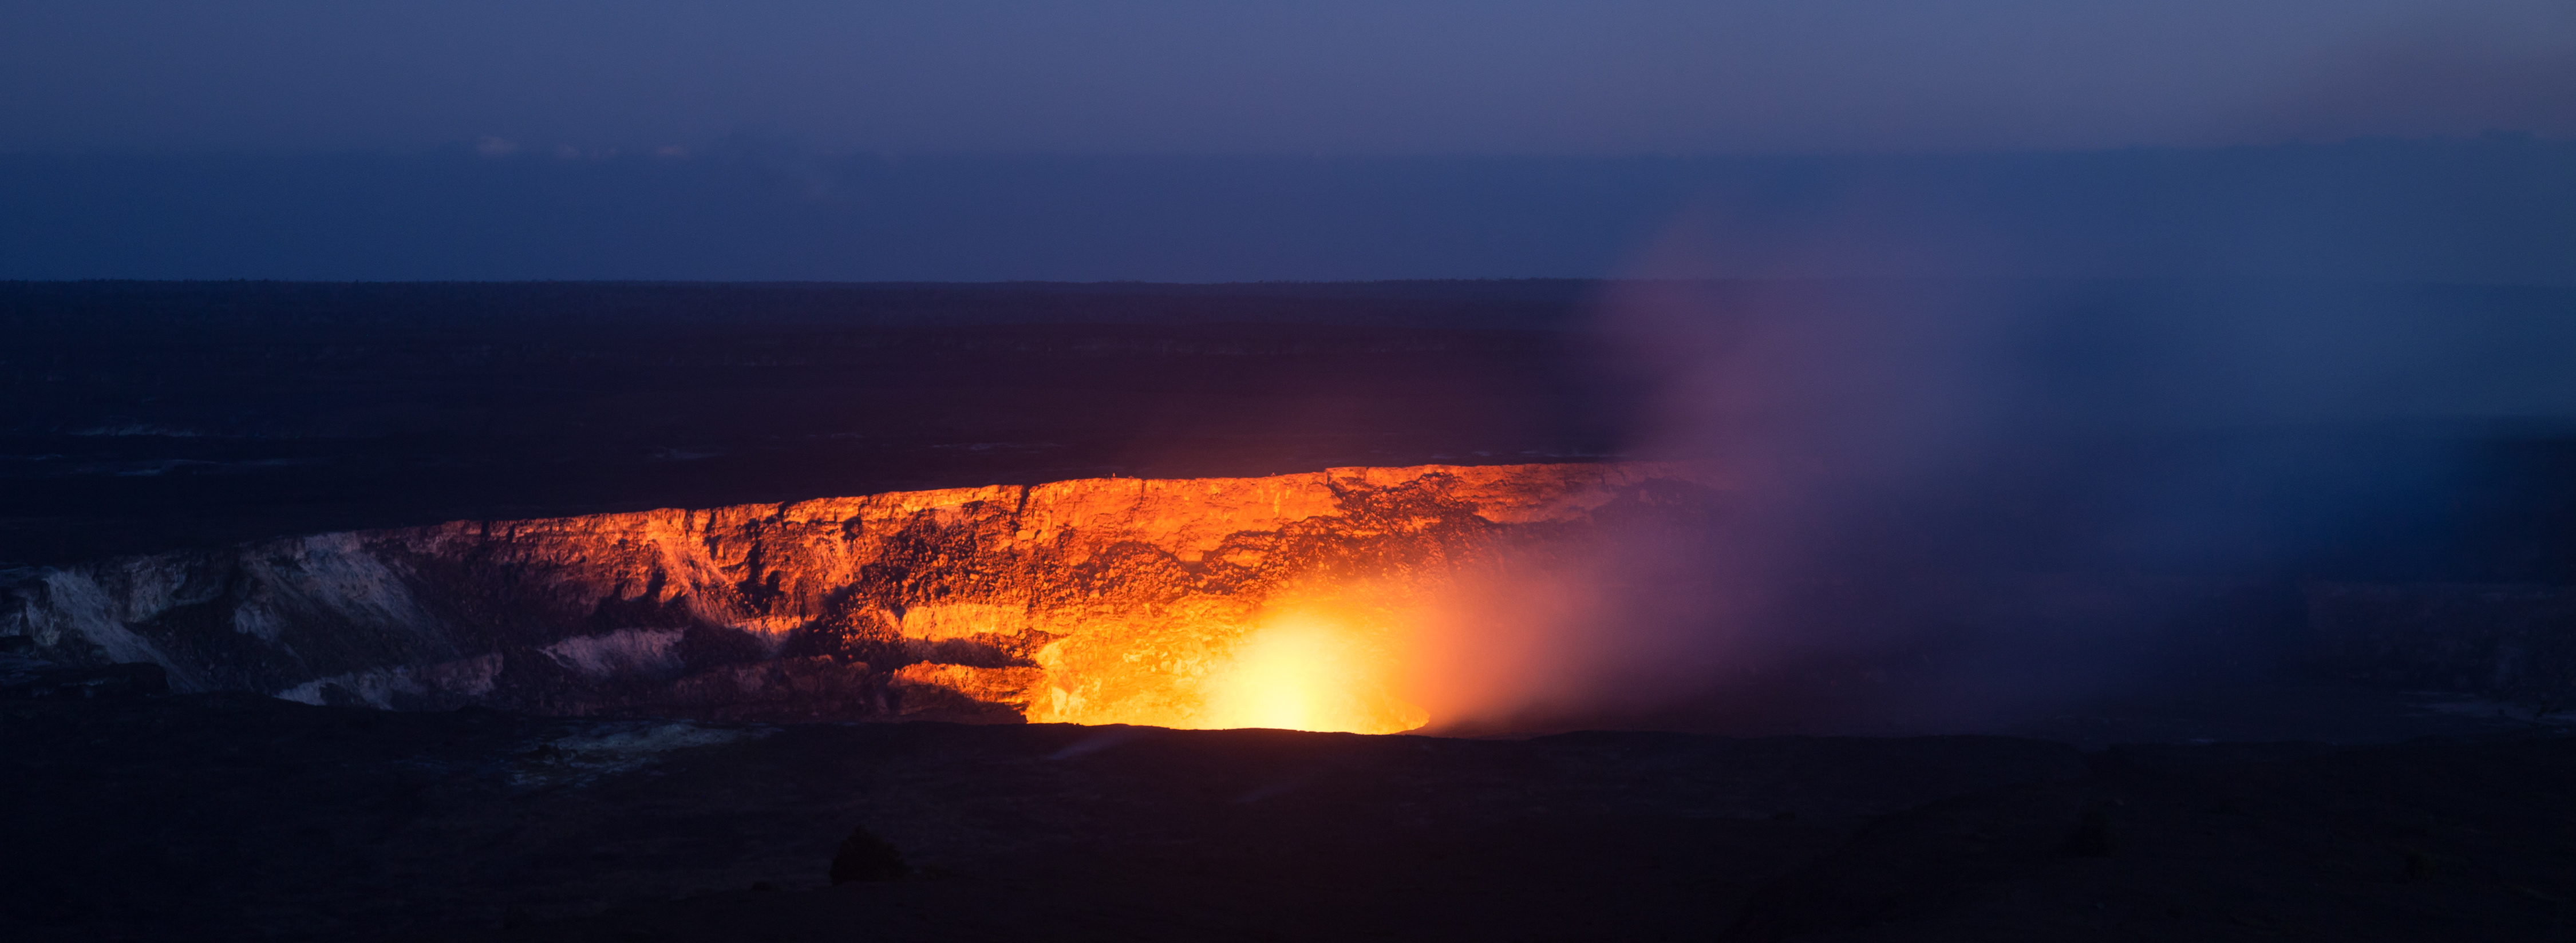 Active Halema'uma'u crater in the Kilauea caldera at Volcanoes National Park, Big Island of Hawaii.